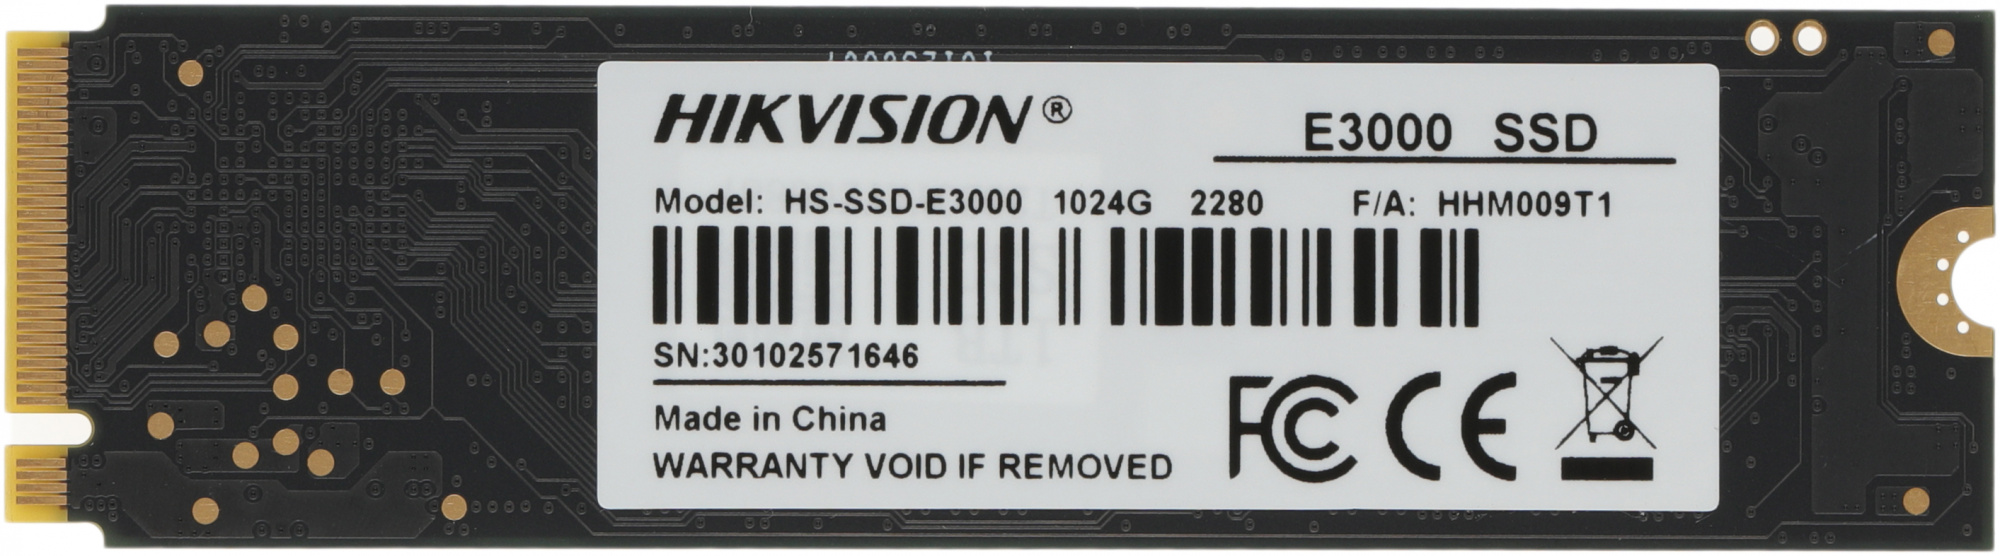 SSD  Hikvision E3000 HS-SSD-E3000/1024G Hiksemi 1, M.2 2280, PCIe 3.0 x4,  M.2